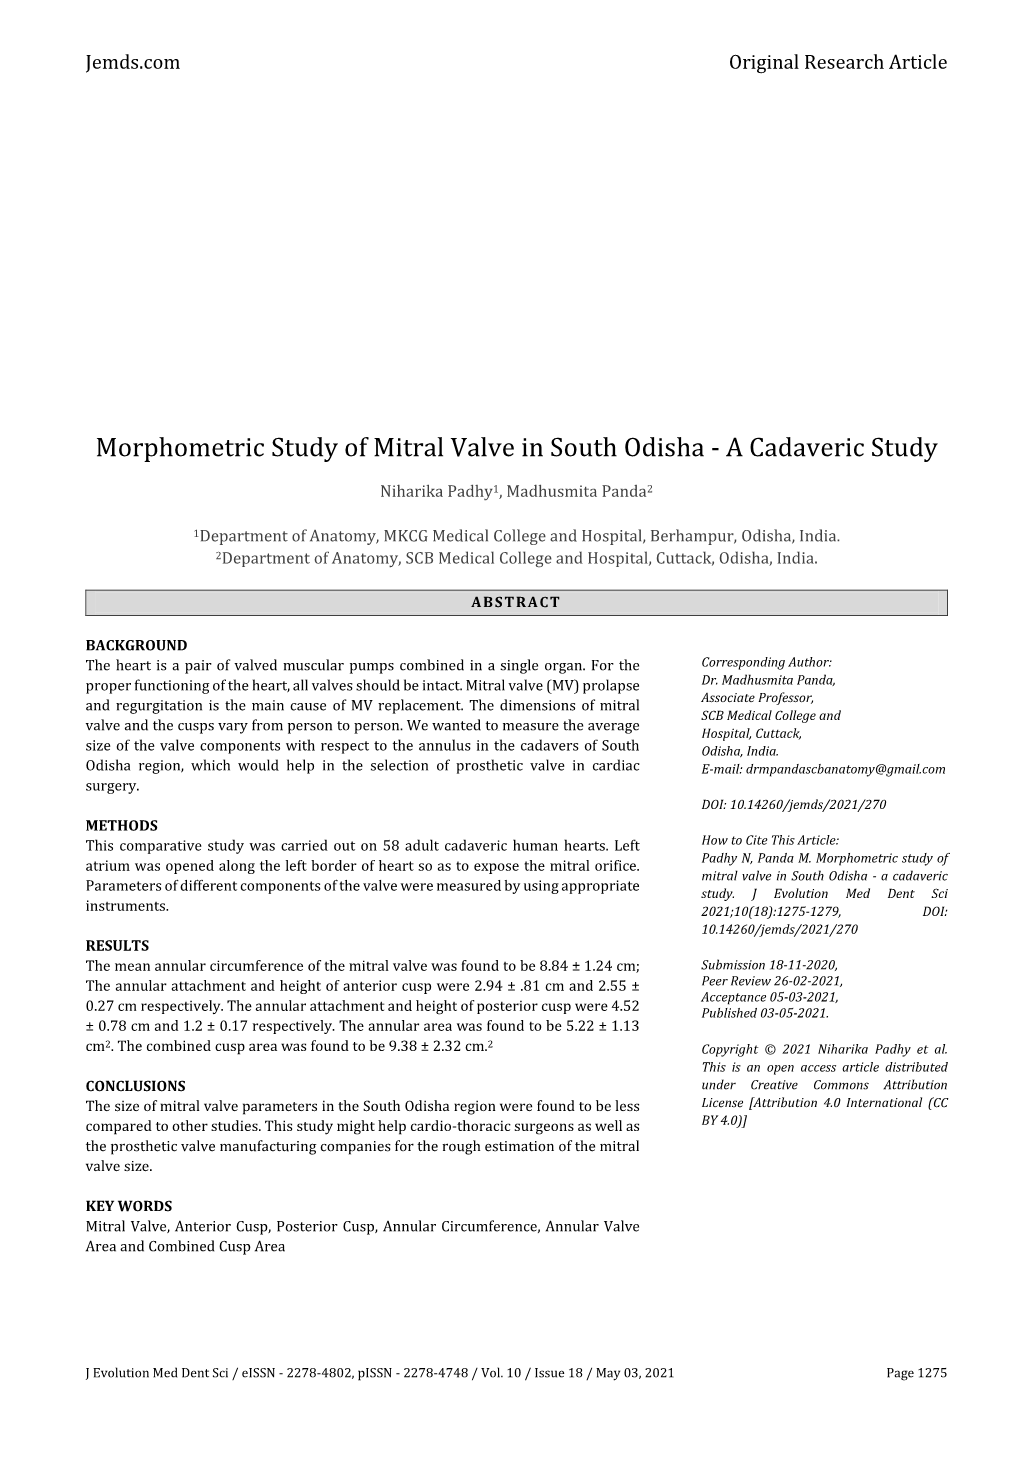 Morphometric Study of Mitral Valve in South Odisha - a Cadaveric Study